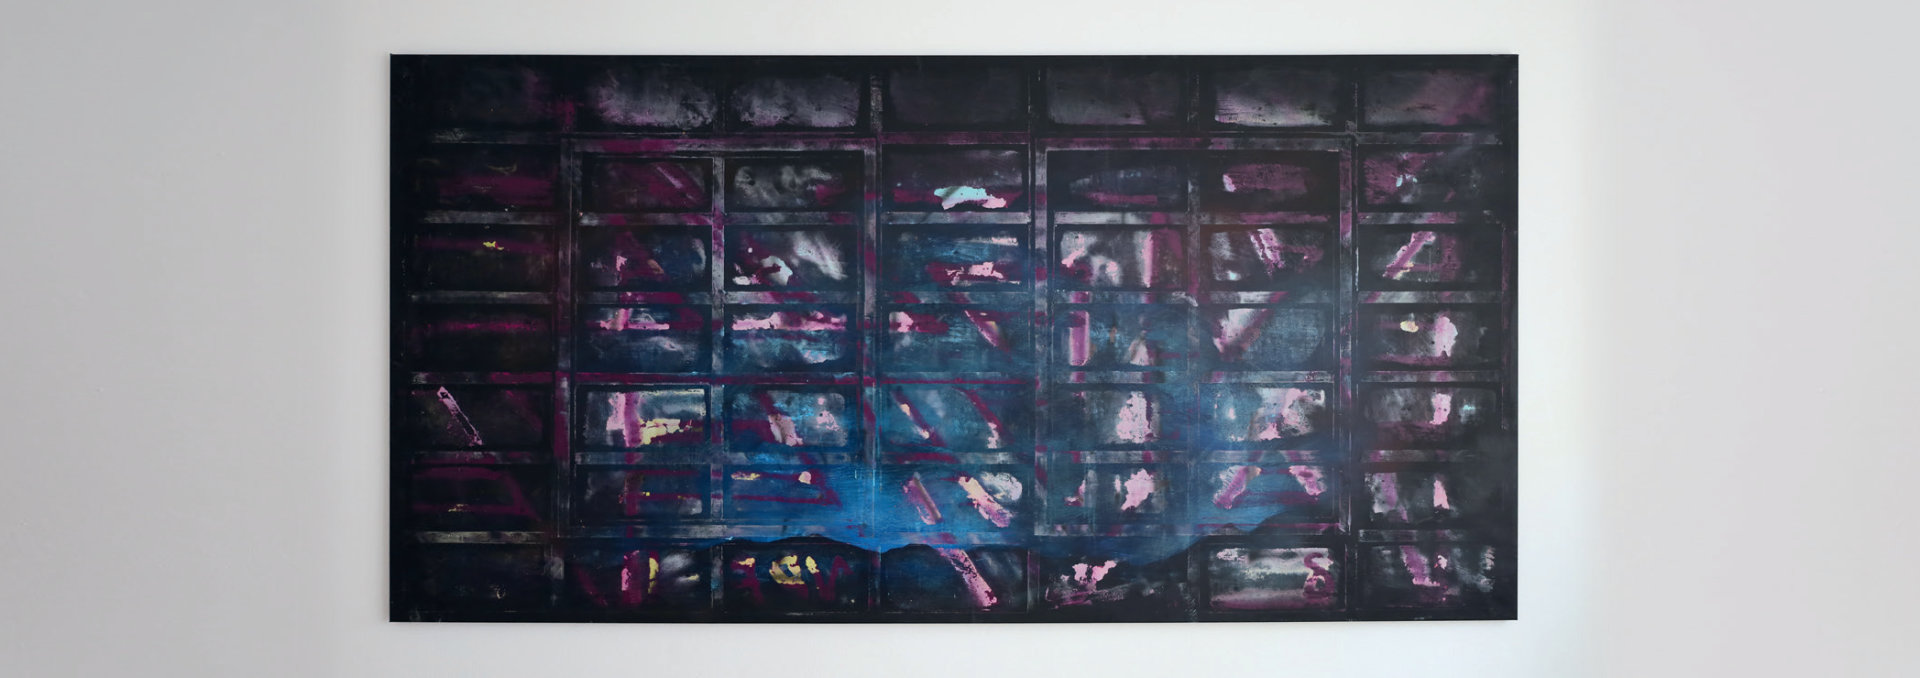 Jakob Traxlmayr - Warehouse Party, 2022 - 300 x 150 cm | Spraylack, Acryl auf Leinwand